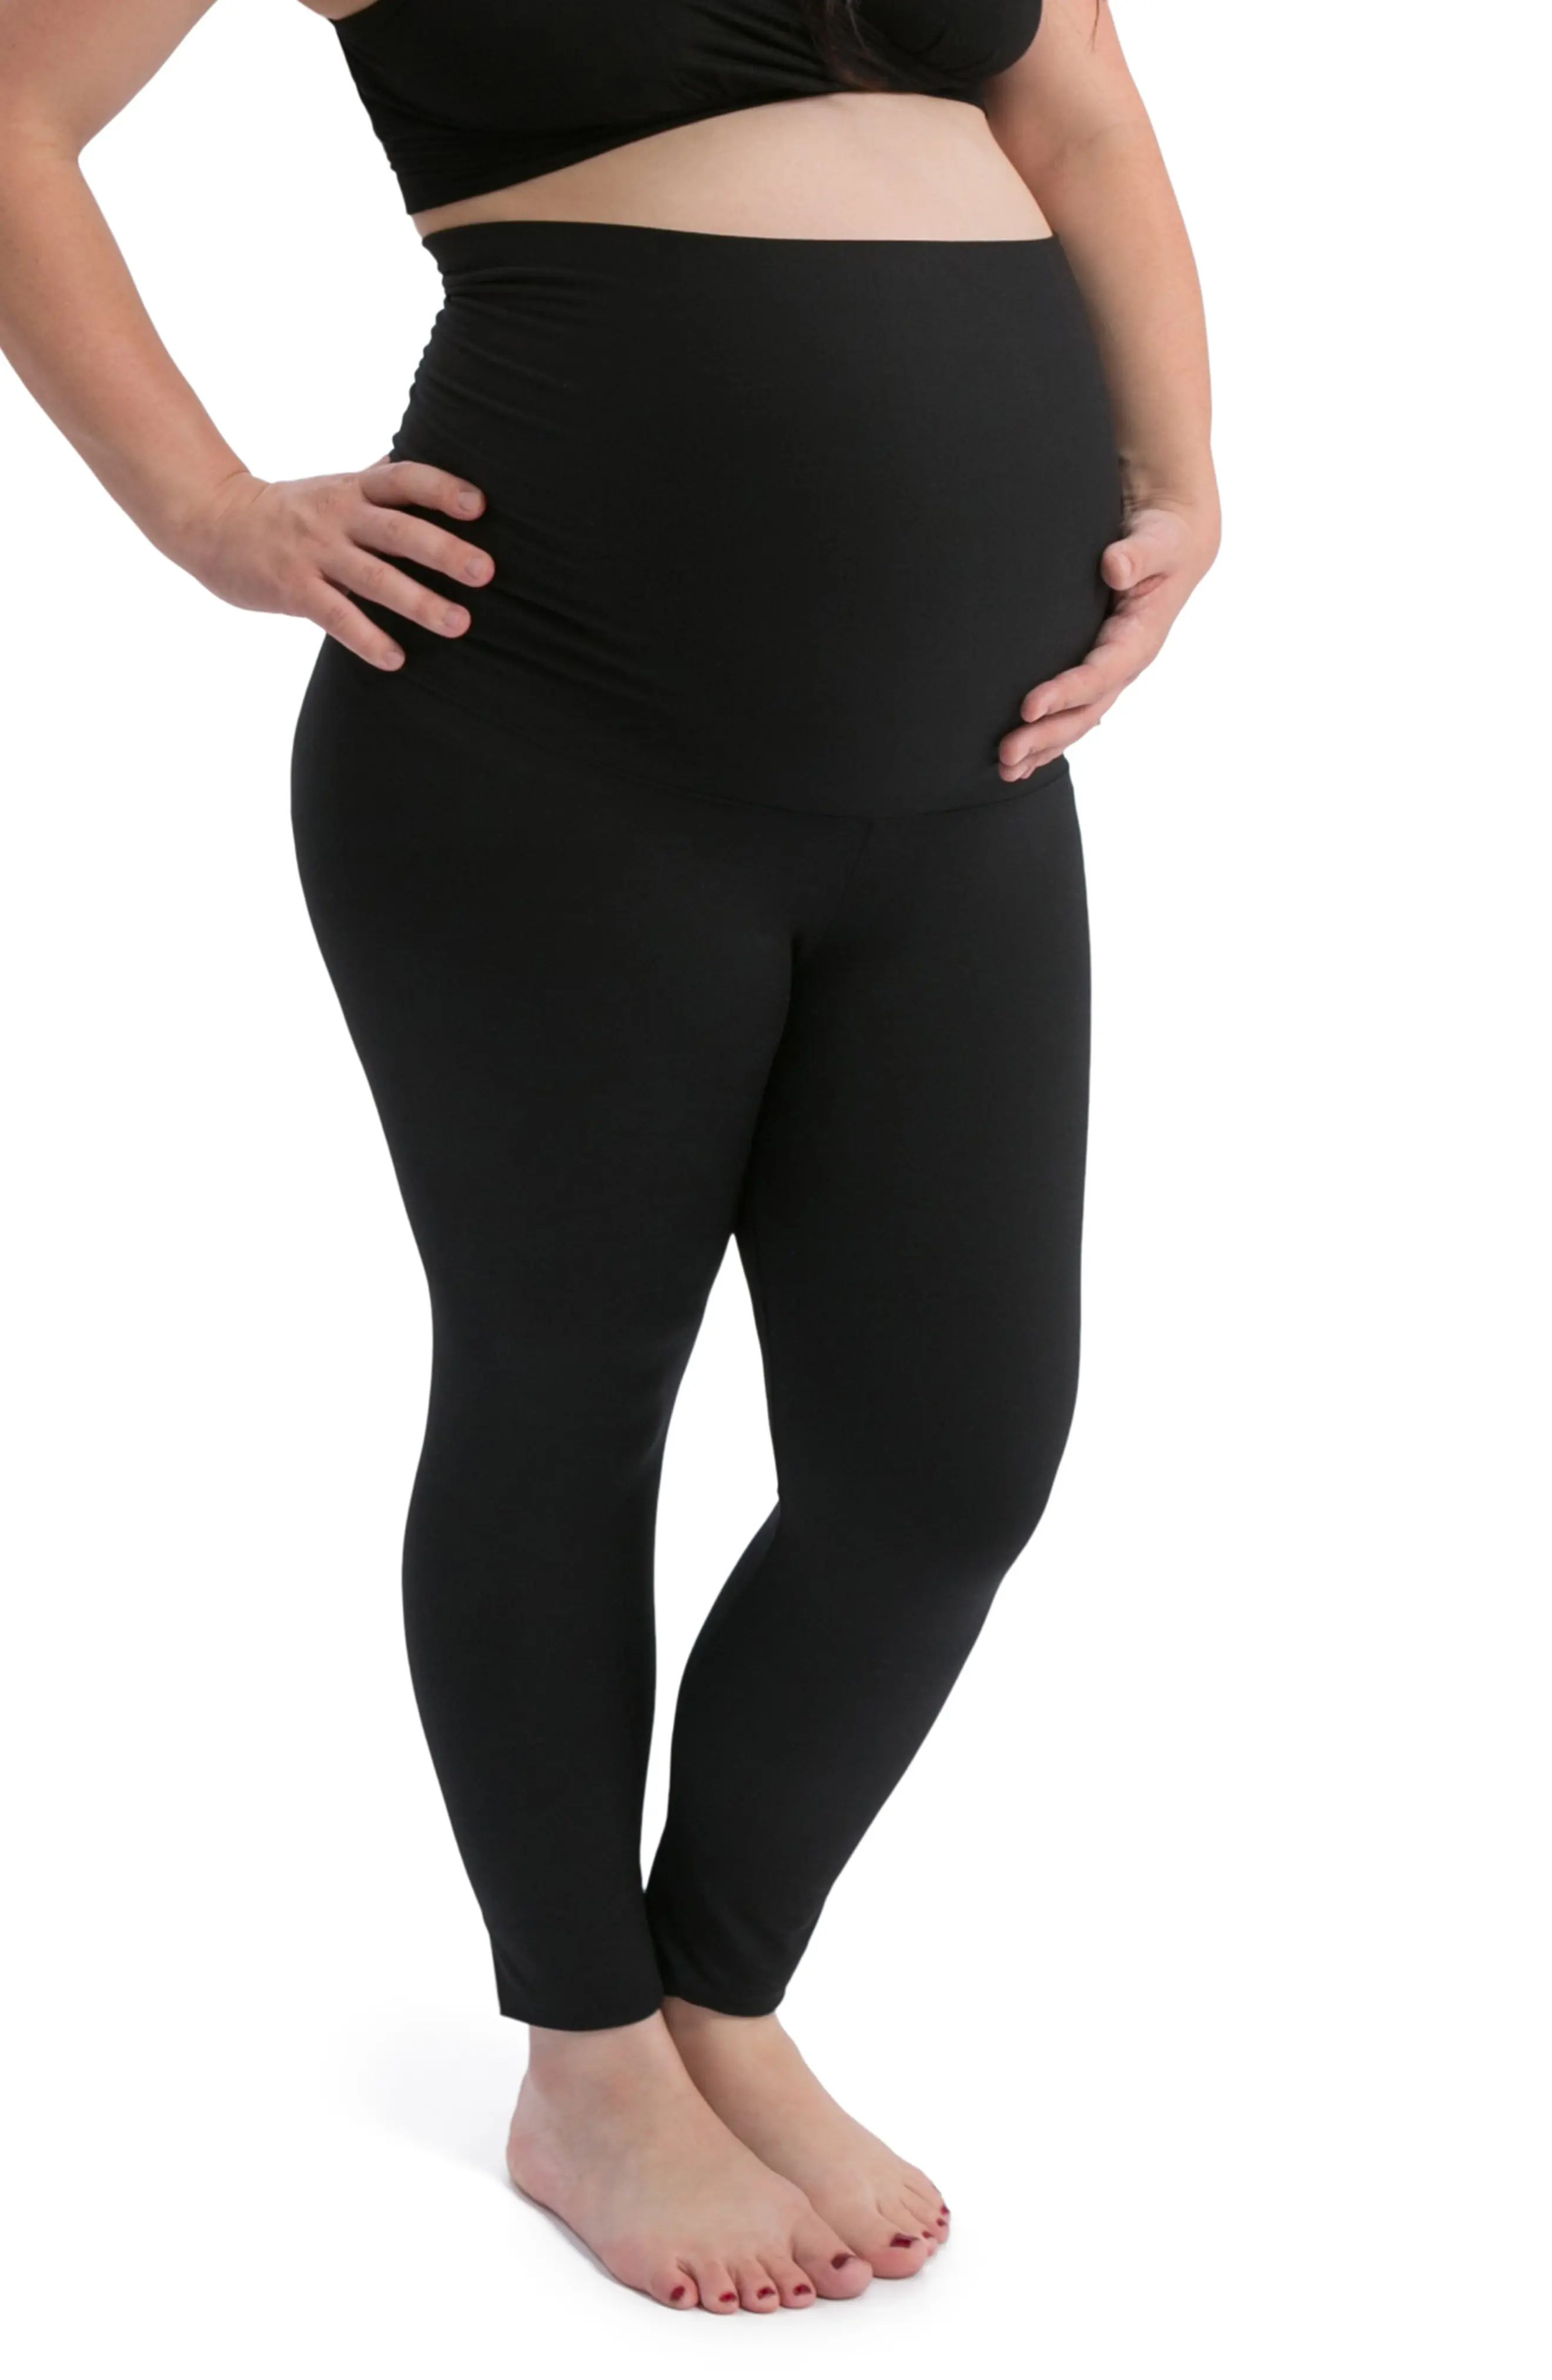 Kindred Bravely Maternity/Postpartum Support Leggings in Black at Nordstrom, Size Medium | Nordstrom